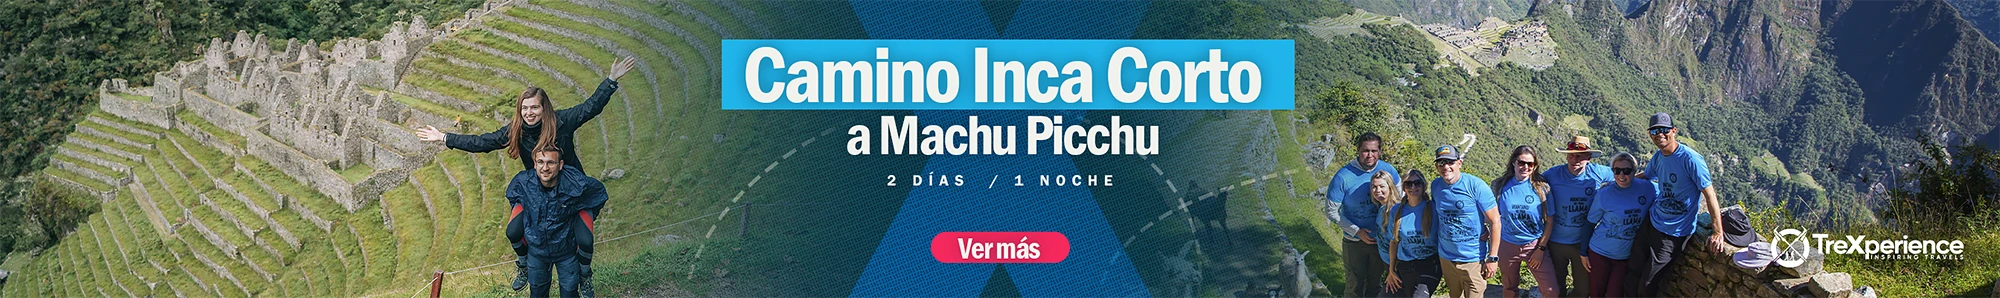 Tour Camino Inca Corto a Machu Picchu | TreXperience